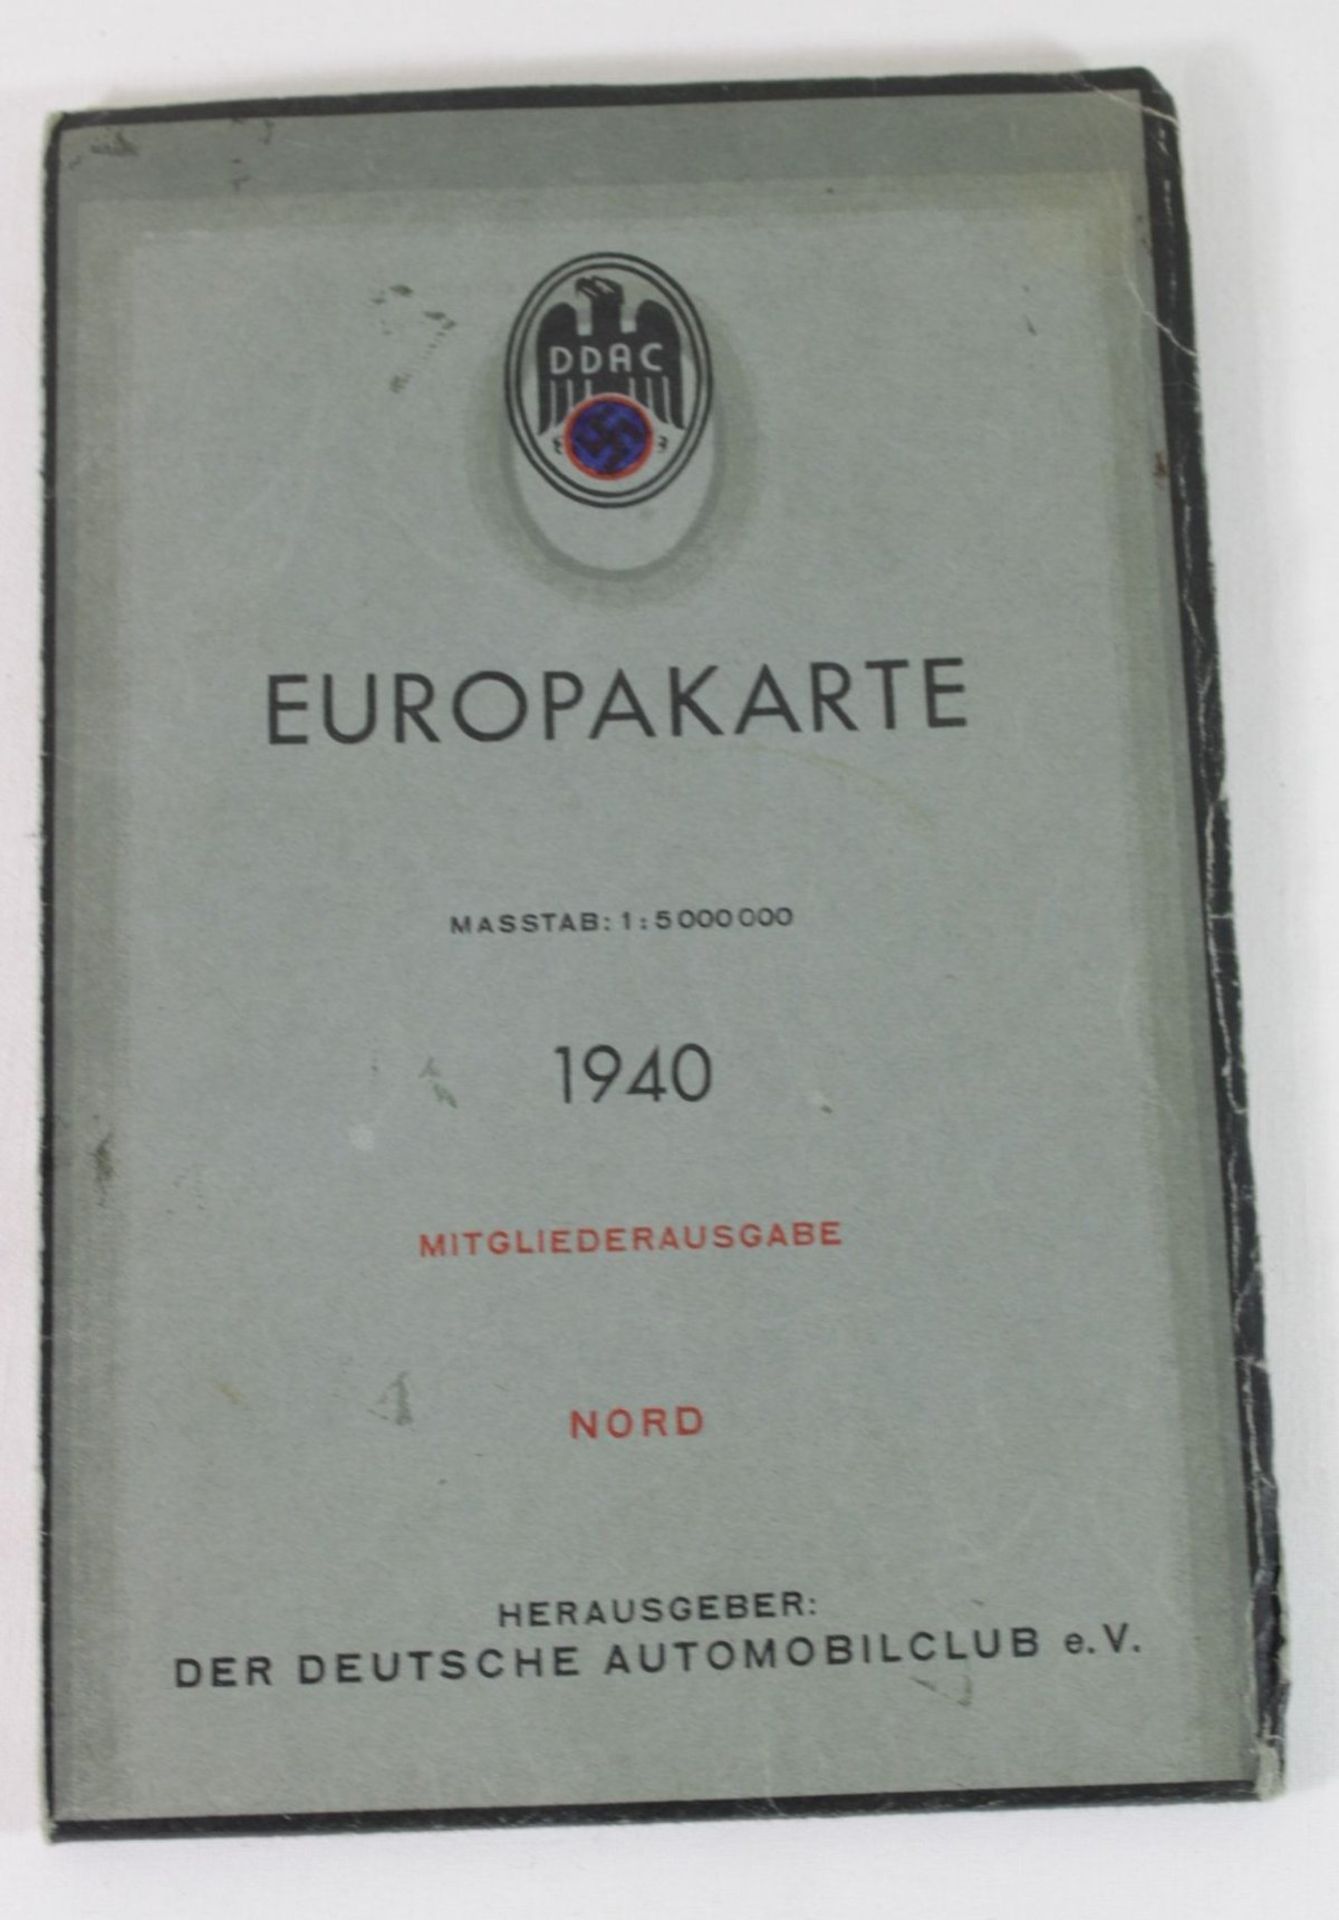 DDAC - Europakarte, 1940.